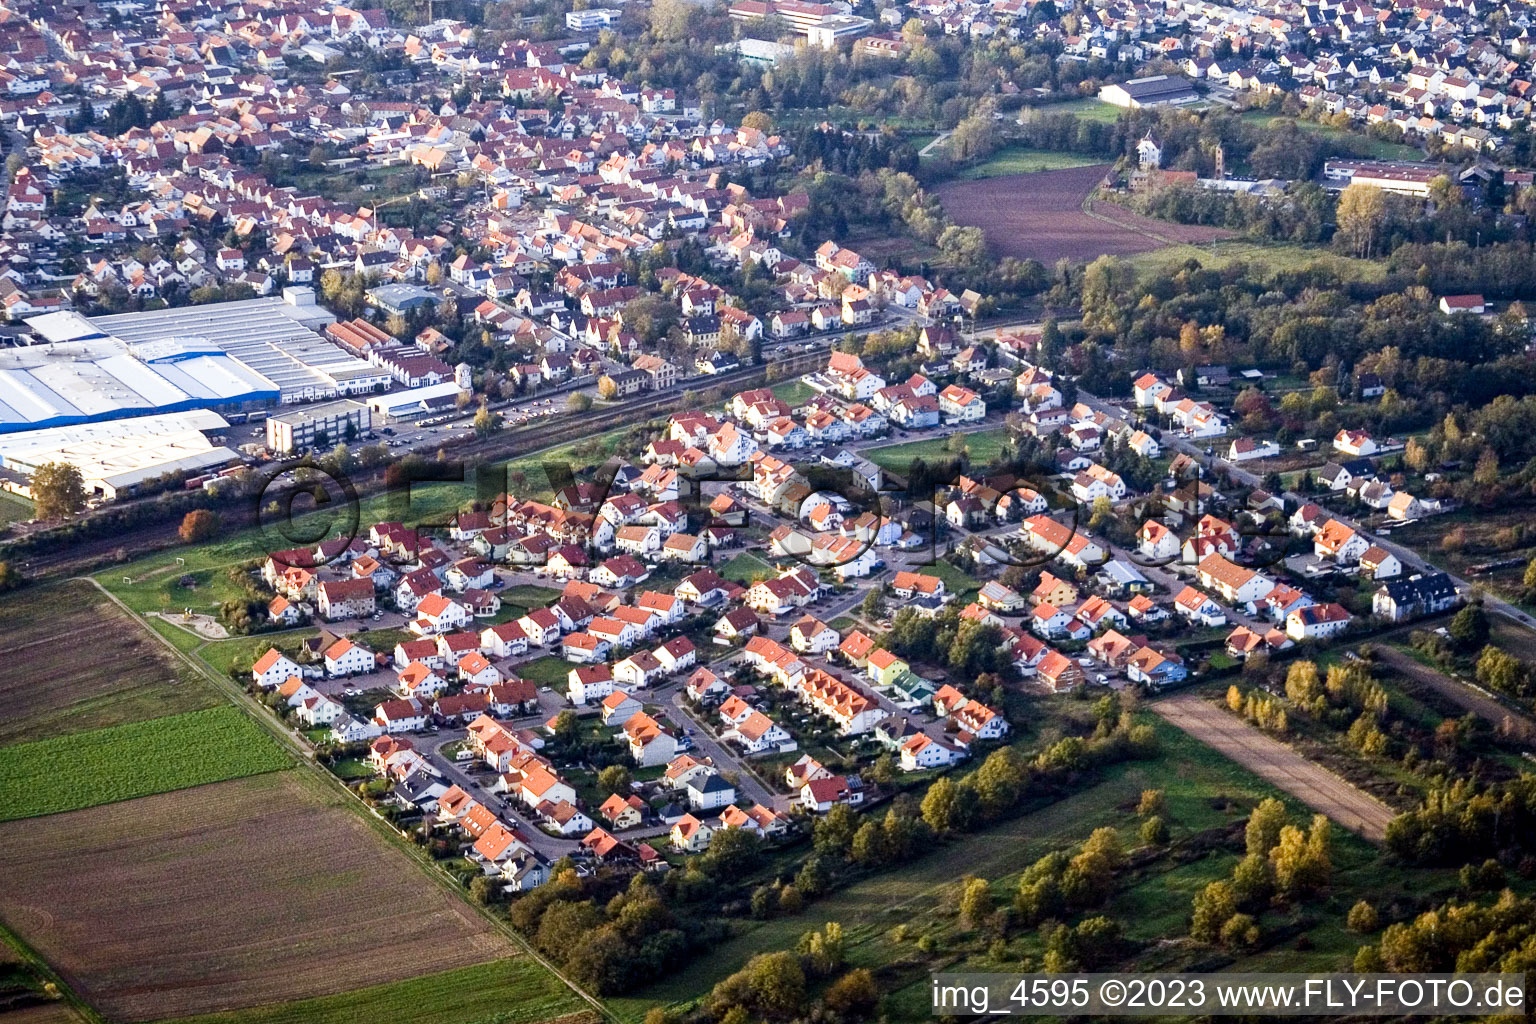 Aerial view of Robert Koch Street in Bellheim in the state Rhineland-Palatinate, Germany